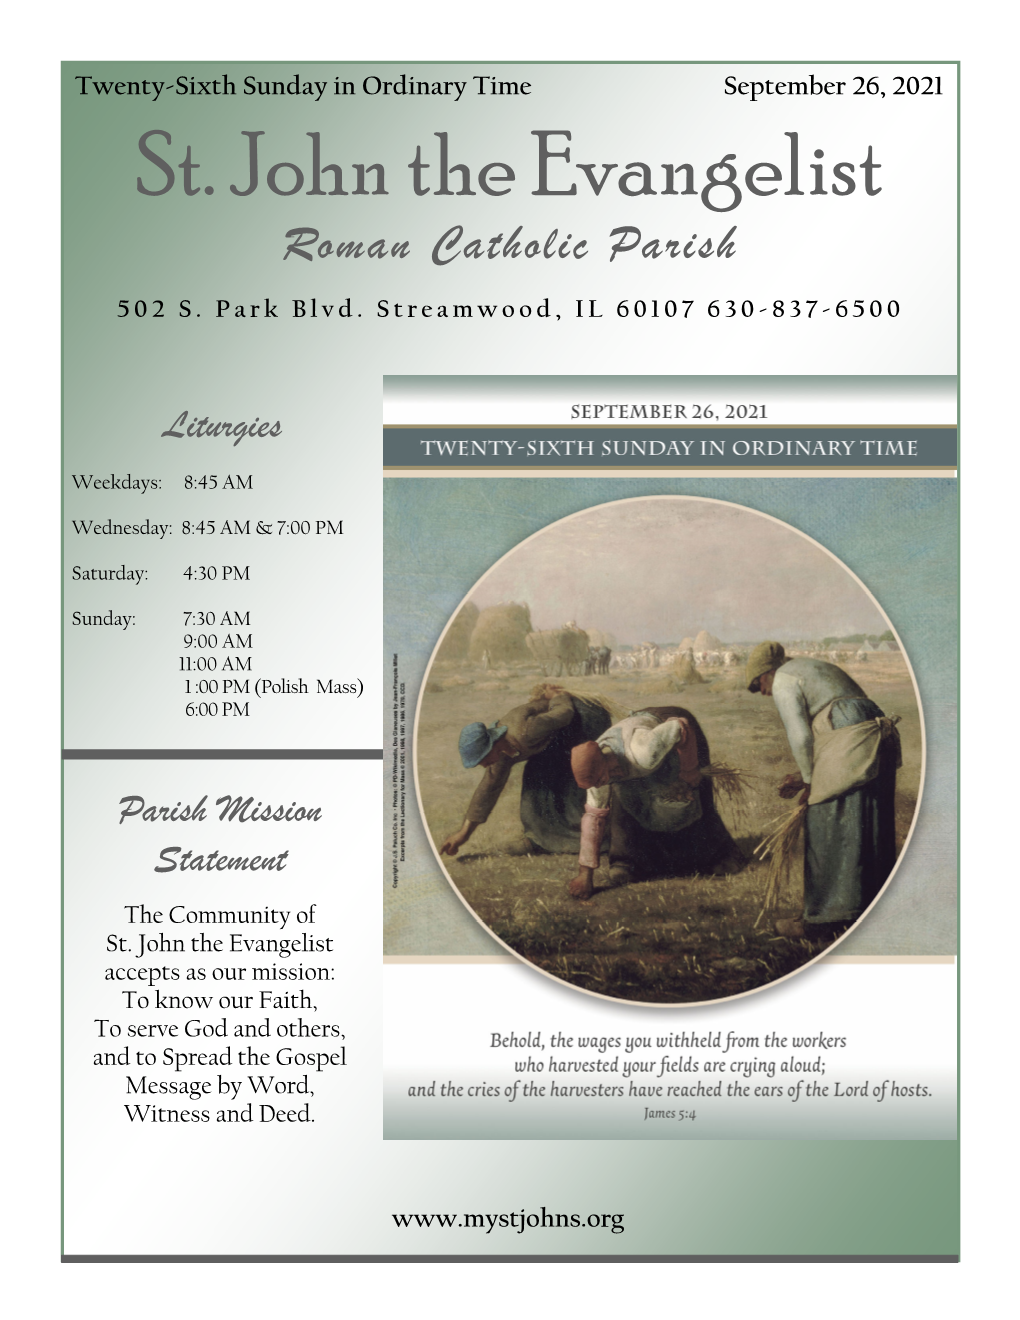 St. John the Evangelist Roman Catholic Parish 502 S